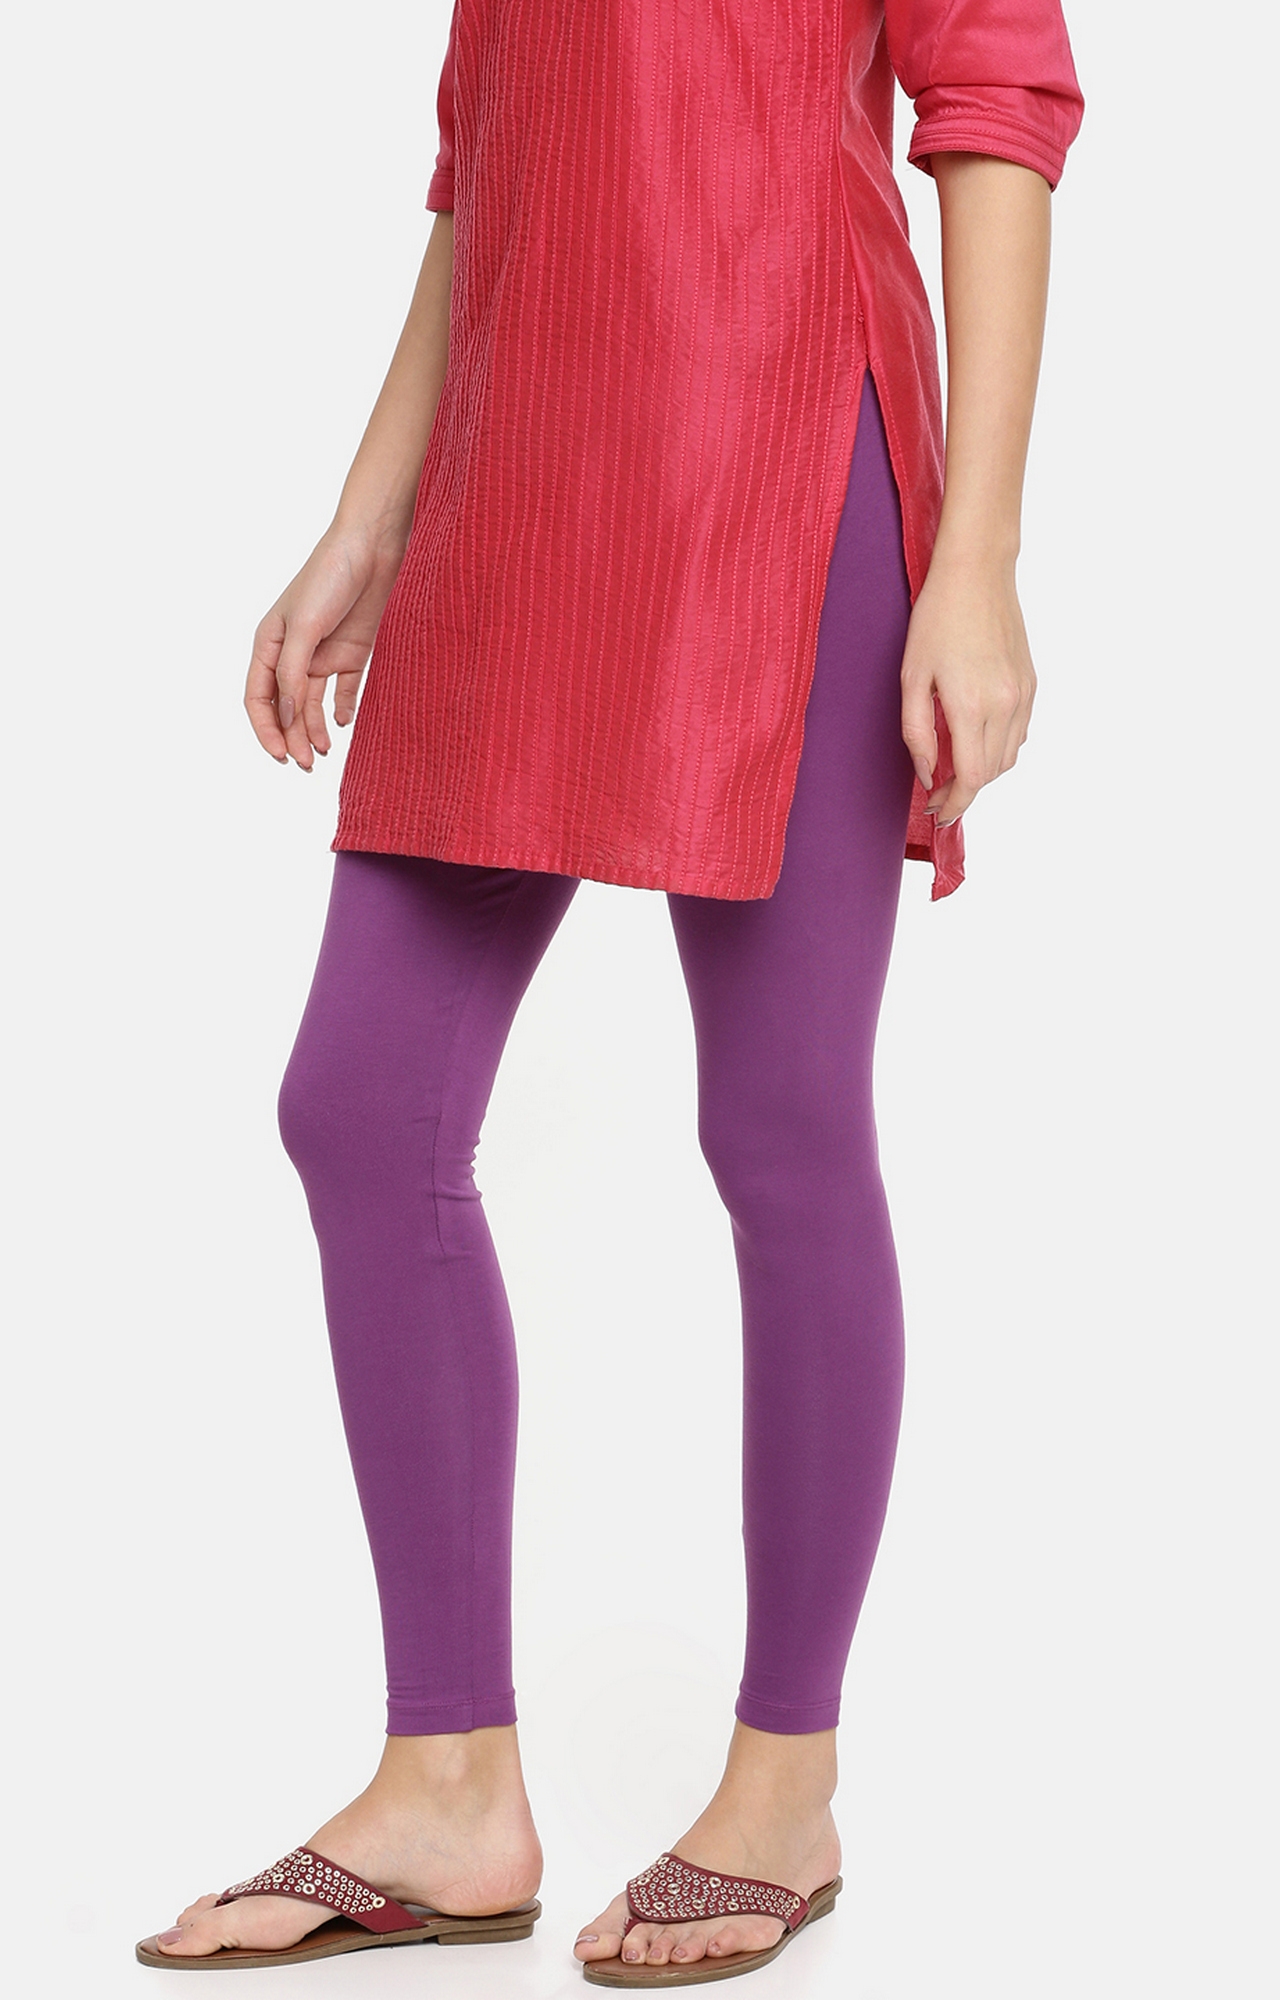 Buy Go Colors Women Solid Off White Ankle Length Leggings - Tall Online